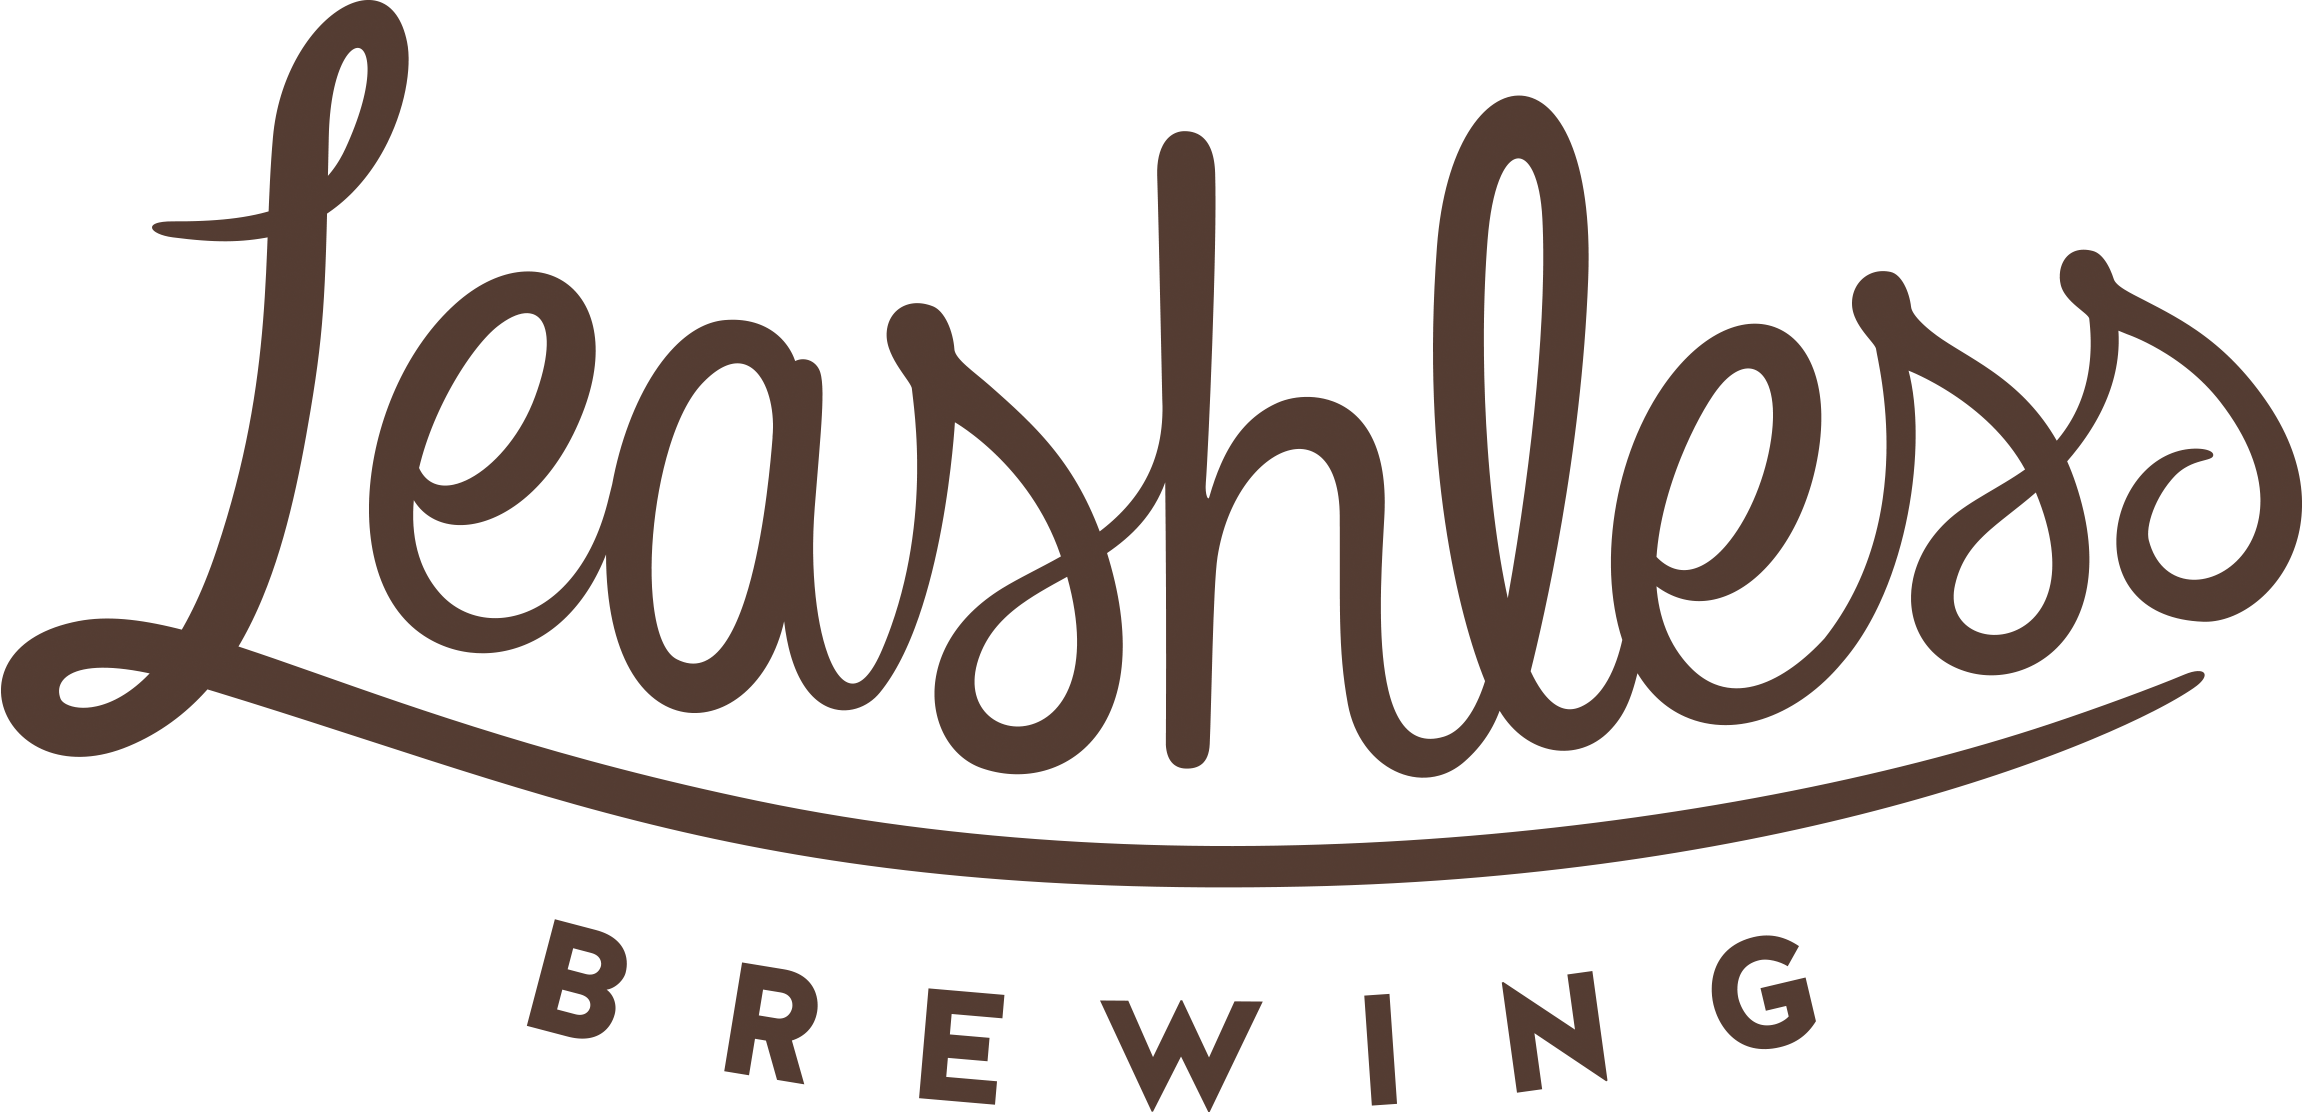 Leashless Brewing - script logo in color